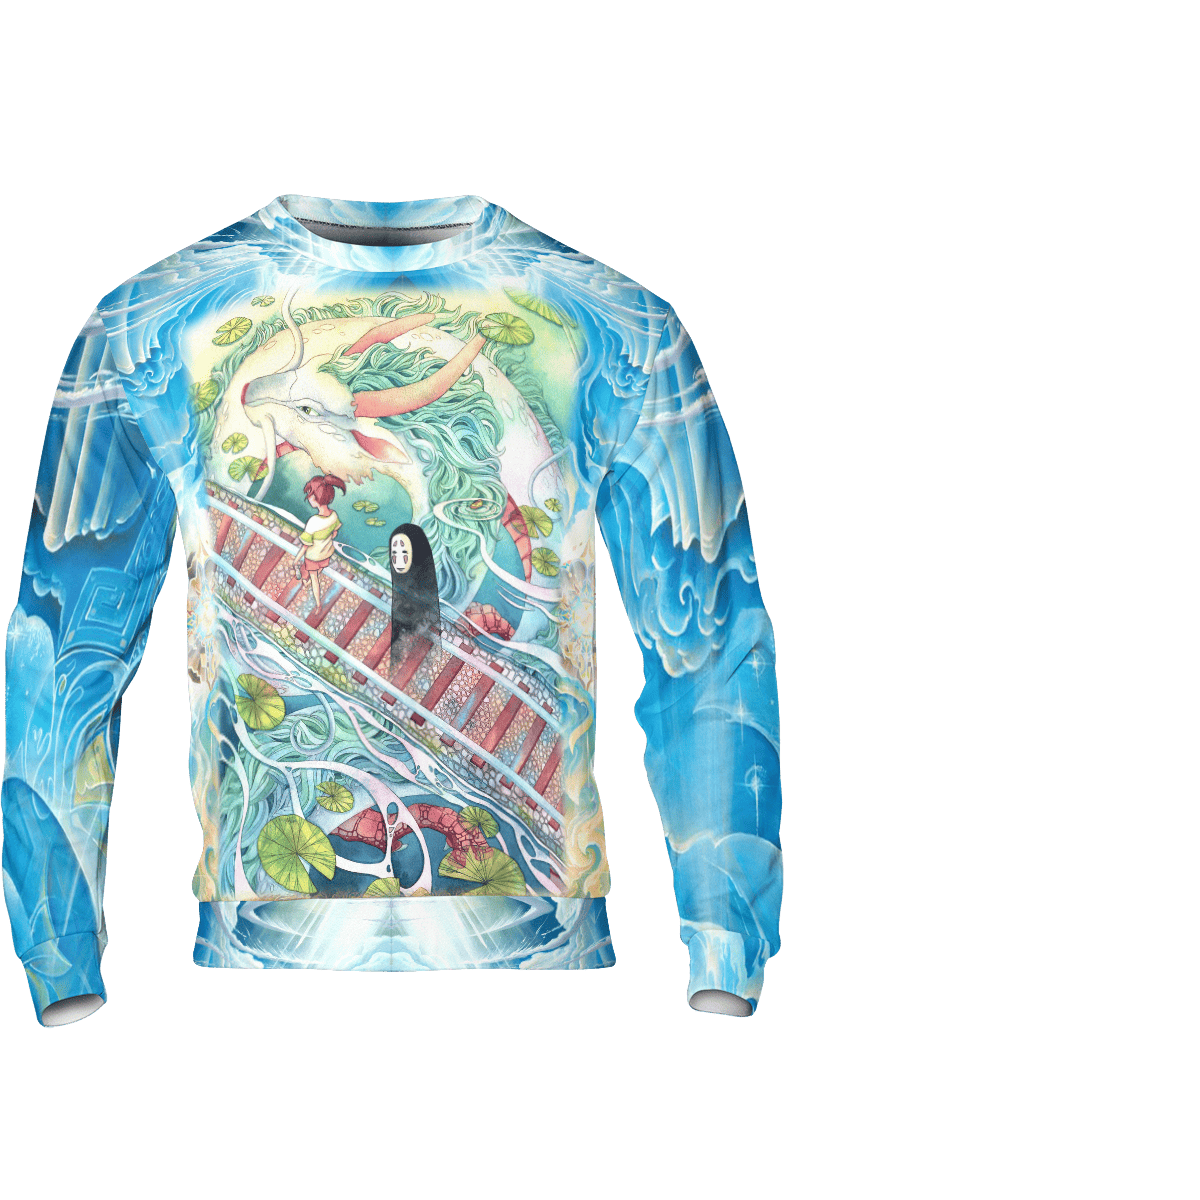 Spirited Away – Follow the Railway 3D Sweatshirt